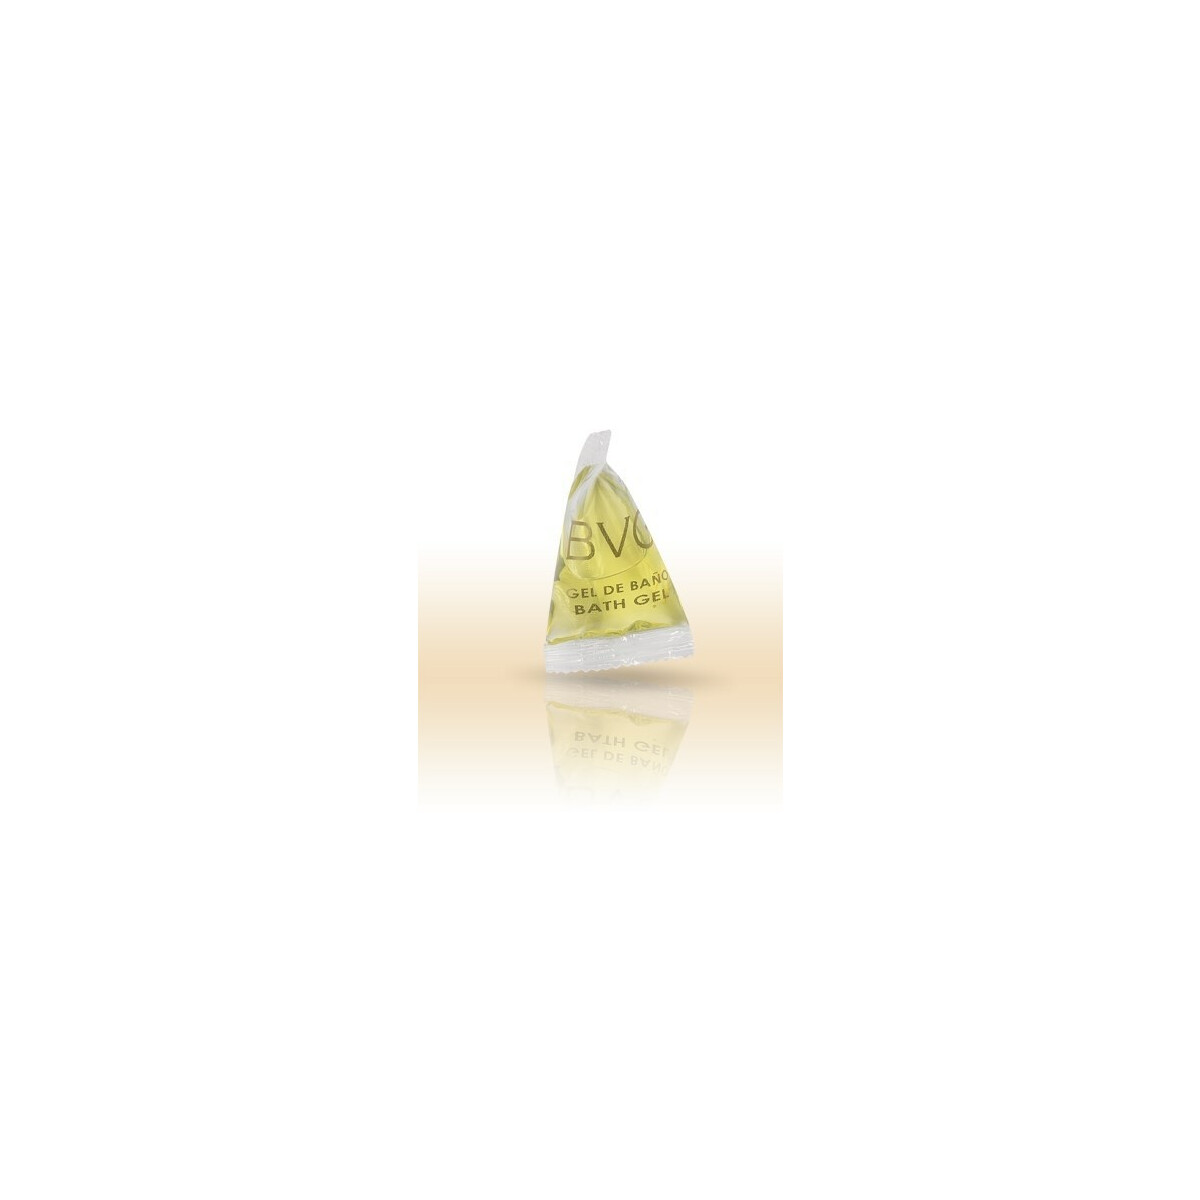 Shower gel with argan oil in a sachet pyramid 15ml